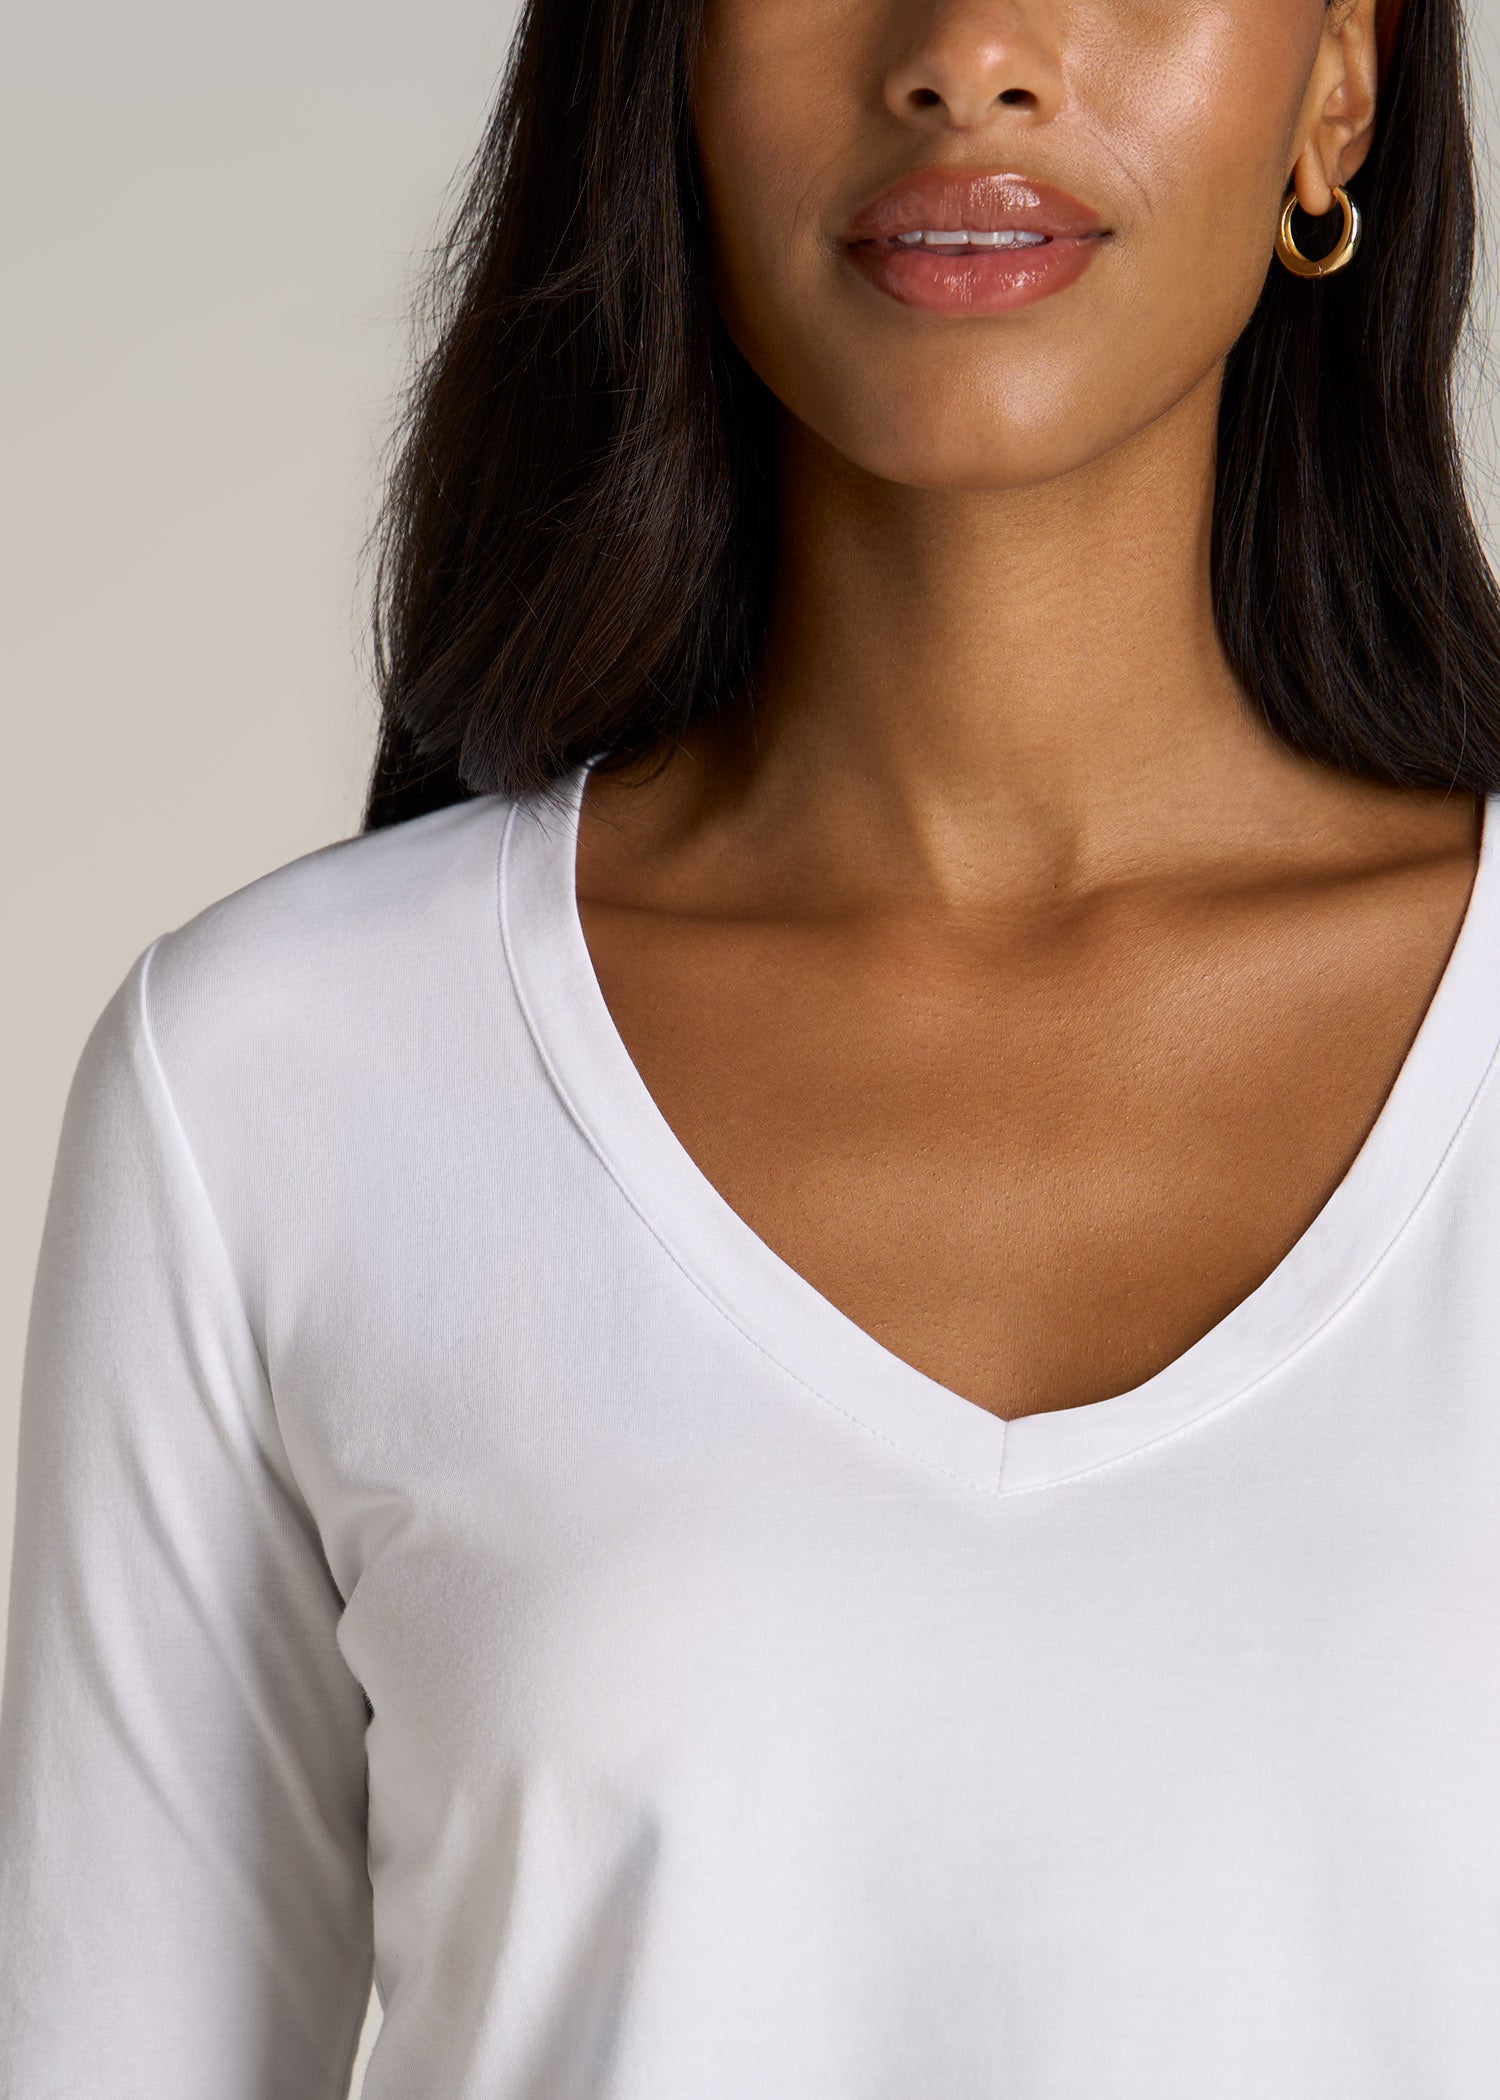 Shein Womens Athletic Shirt V-Neck Size Large Cotton/Modal Blend Orange